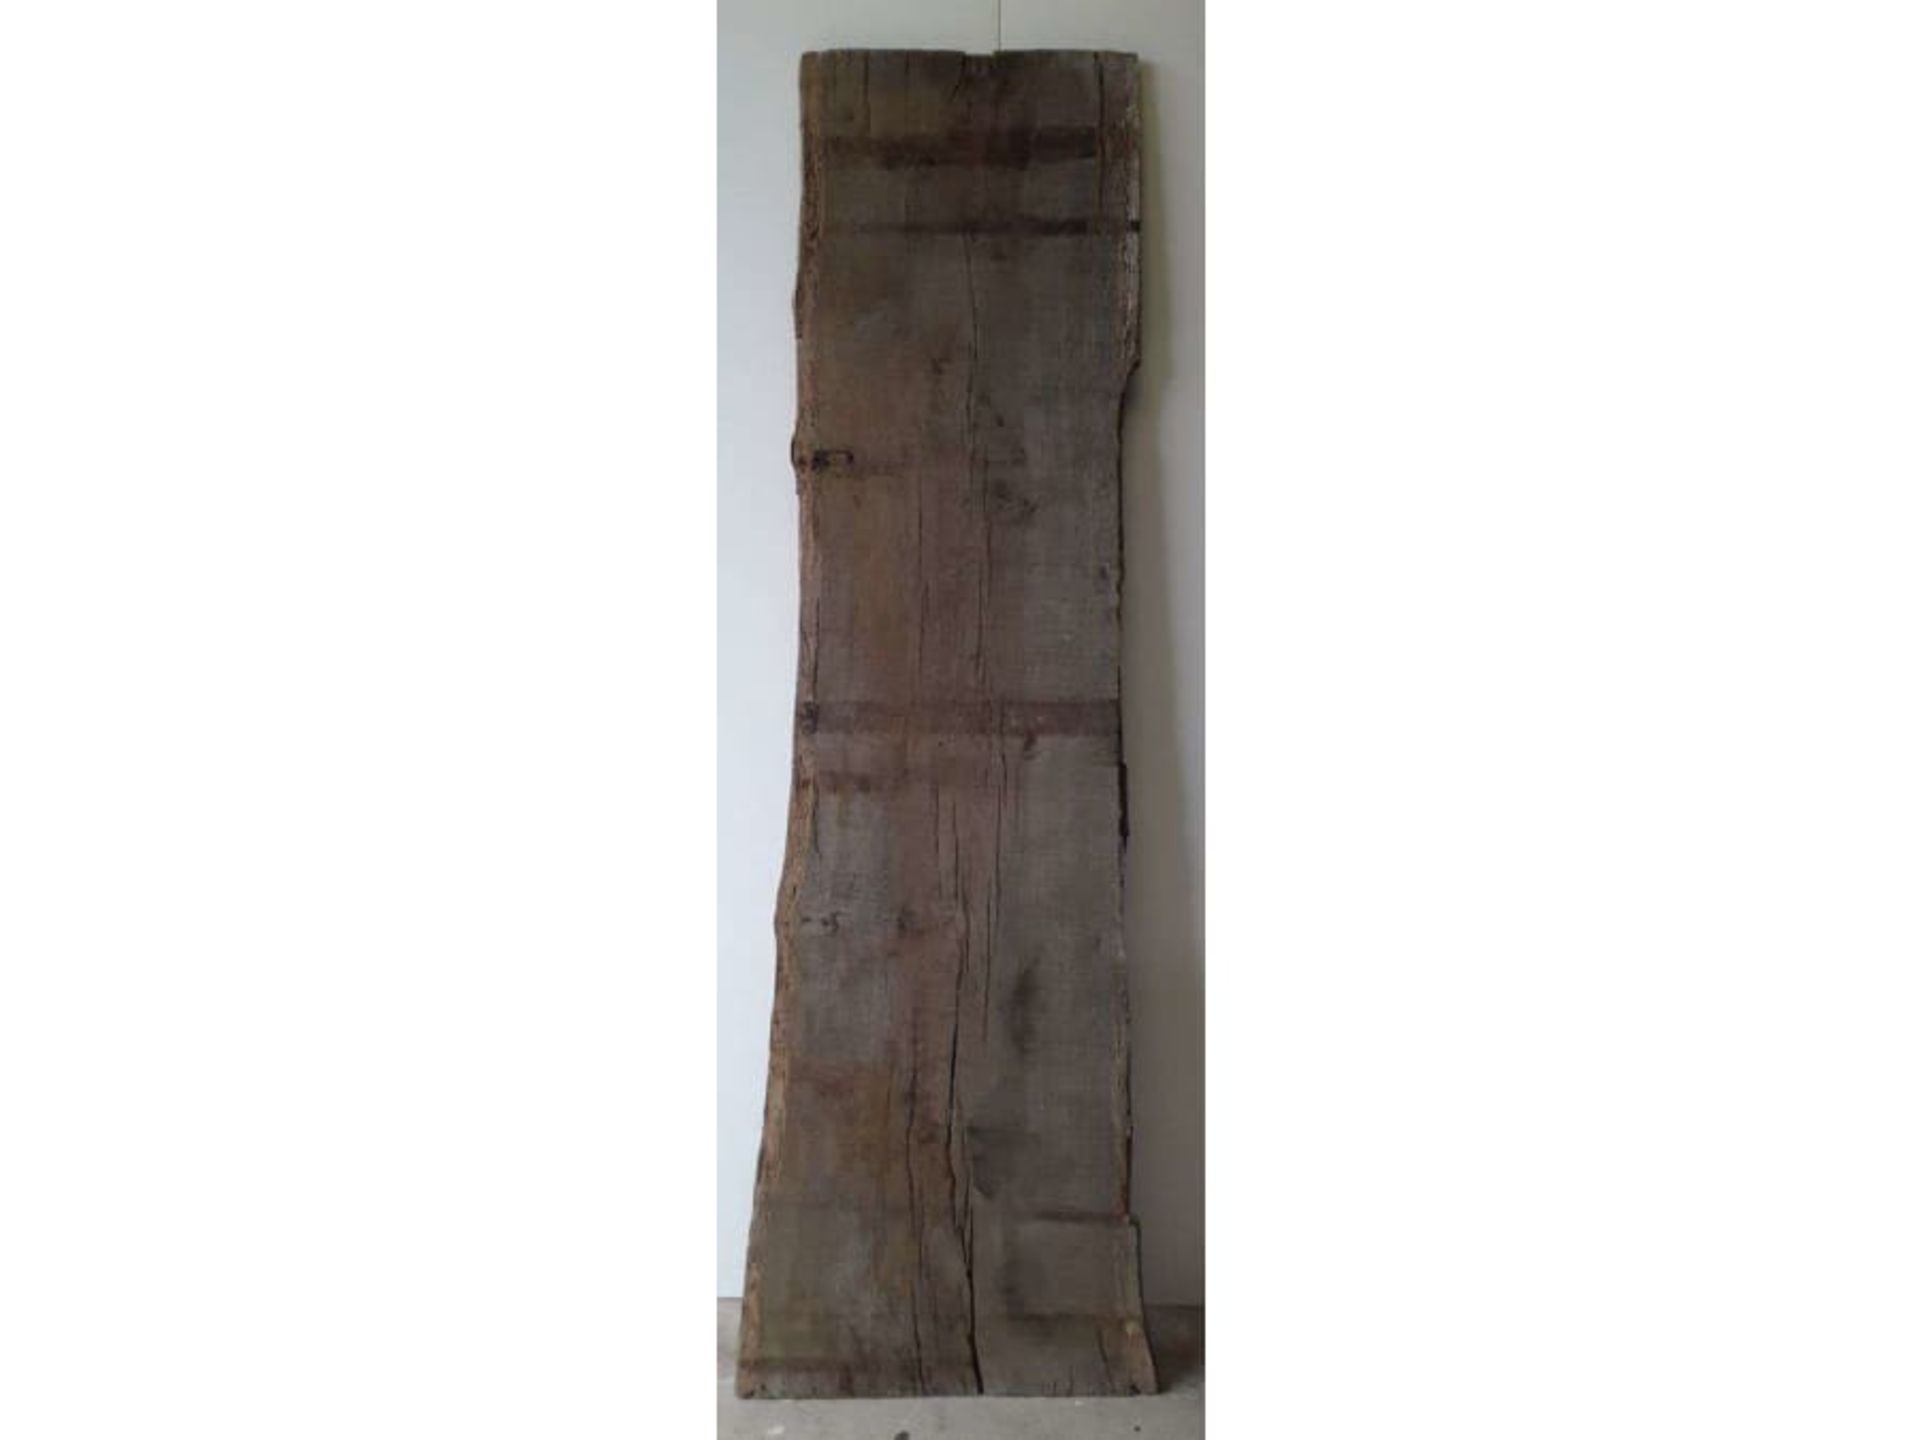 1 x Hardwood Air Dried Sawn Timber Waney Edge / Live Edge English Oak Board / Plank